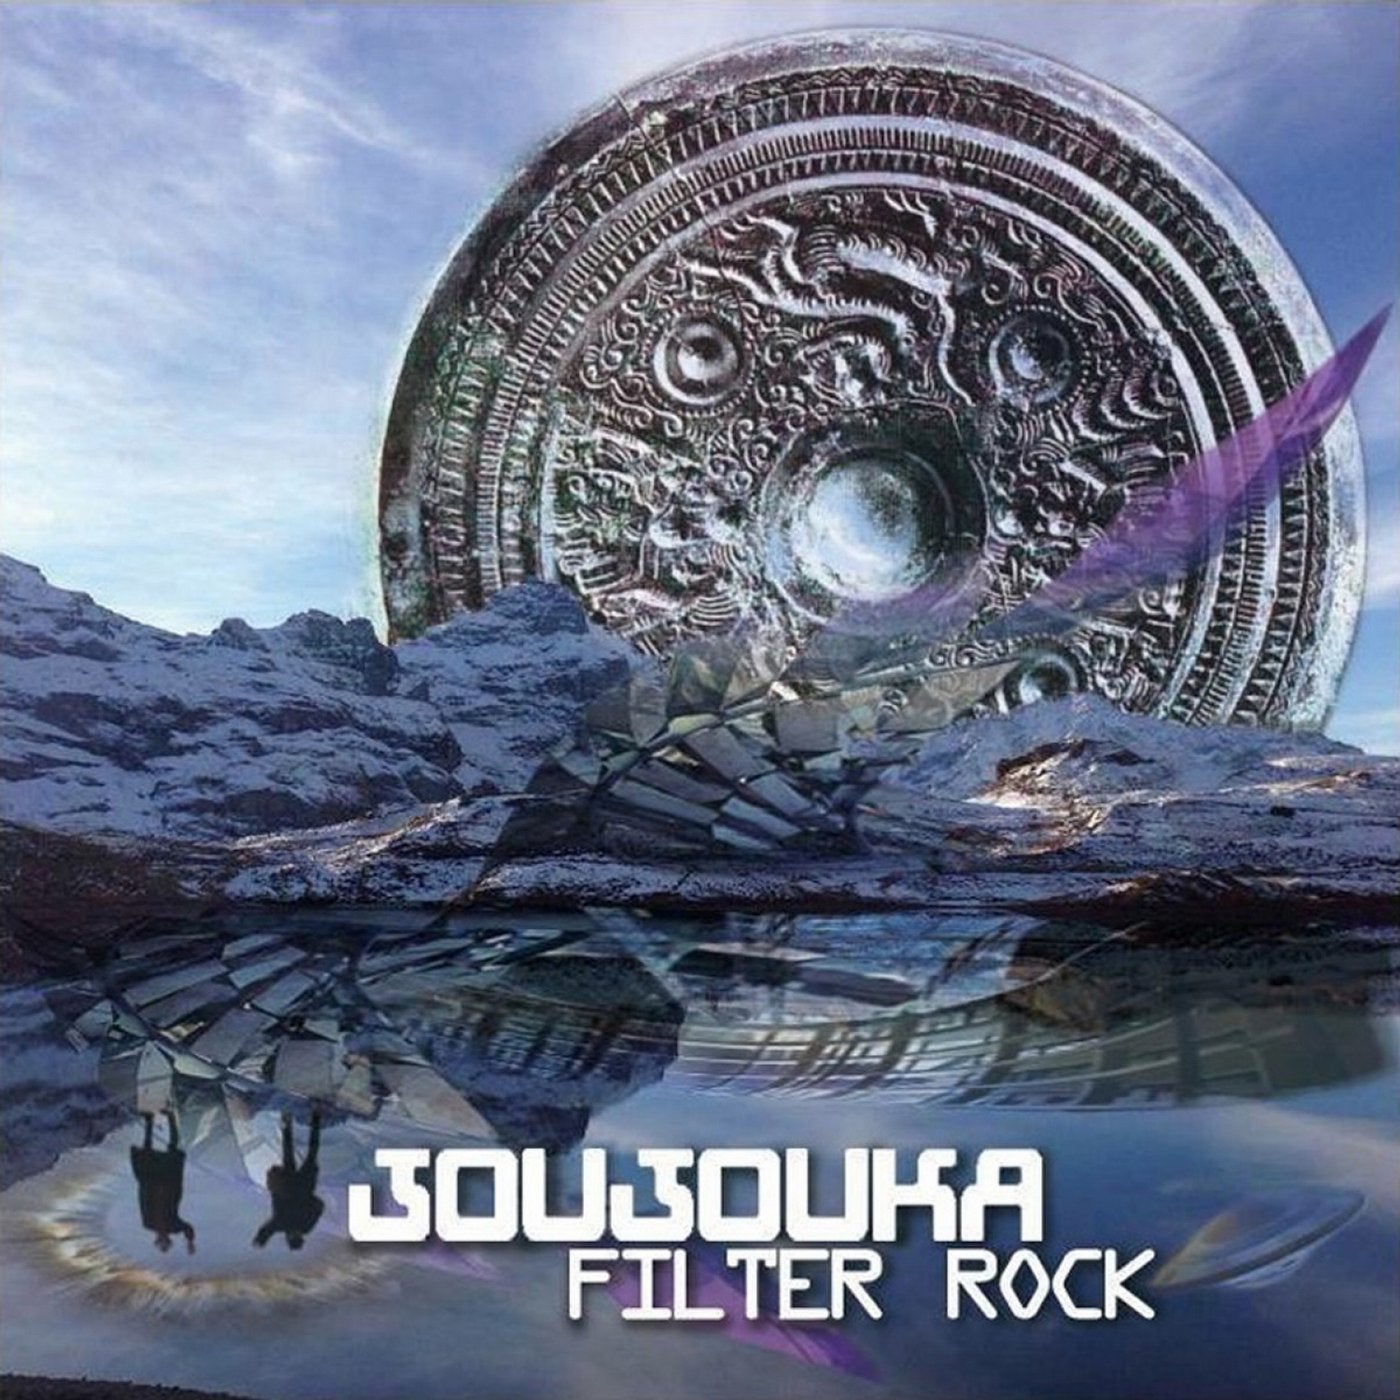 Filter Rock